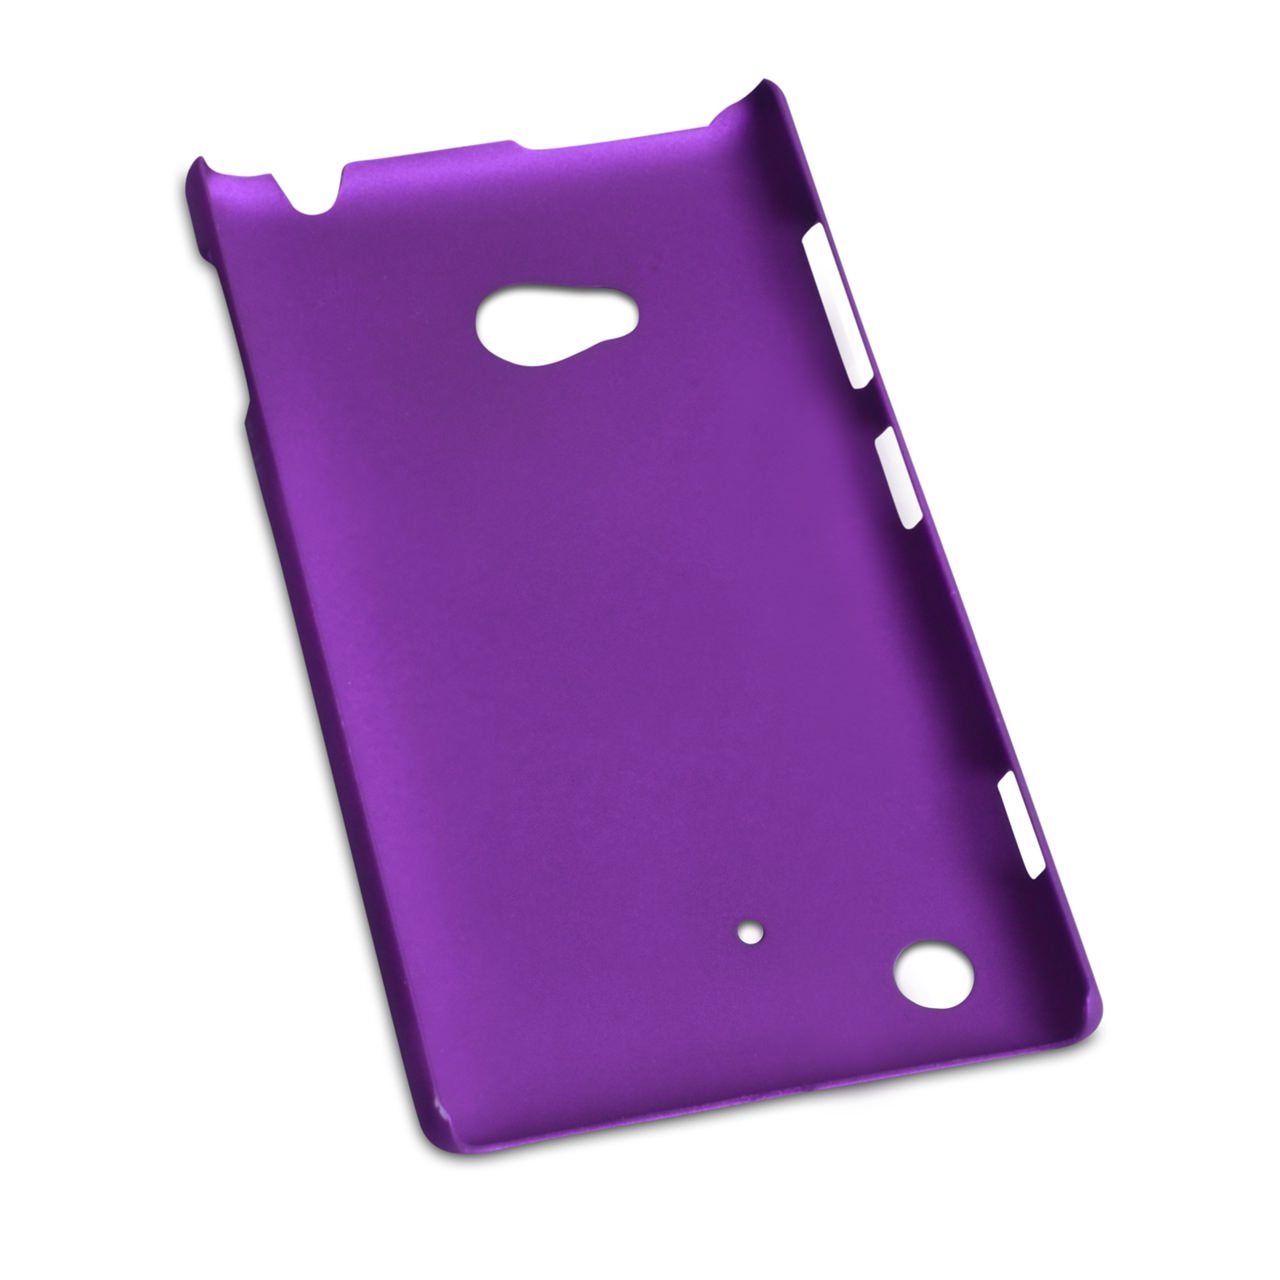 YouSave Accessories Nokia Lumia 720 Hard Hybrid Case - Purple